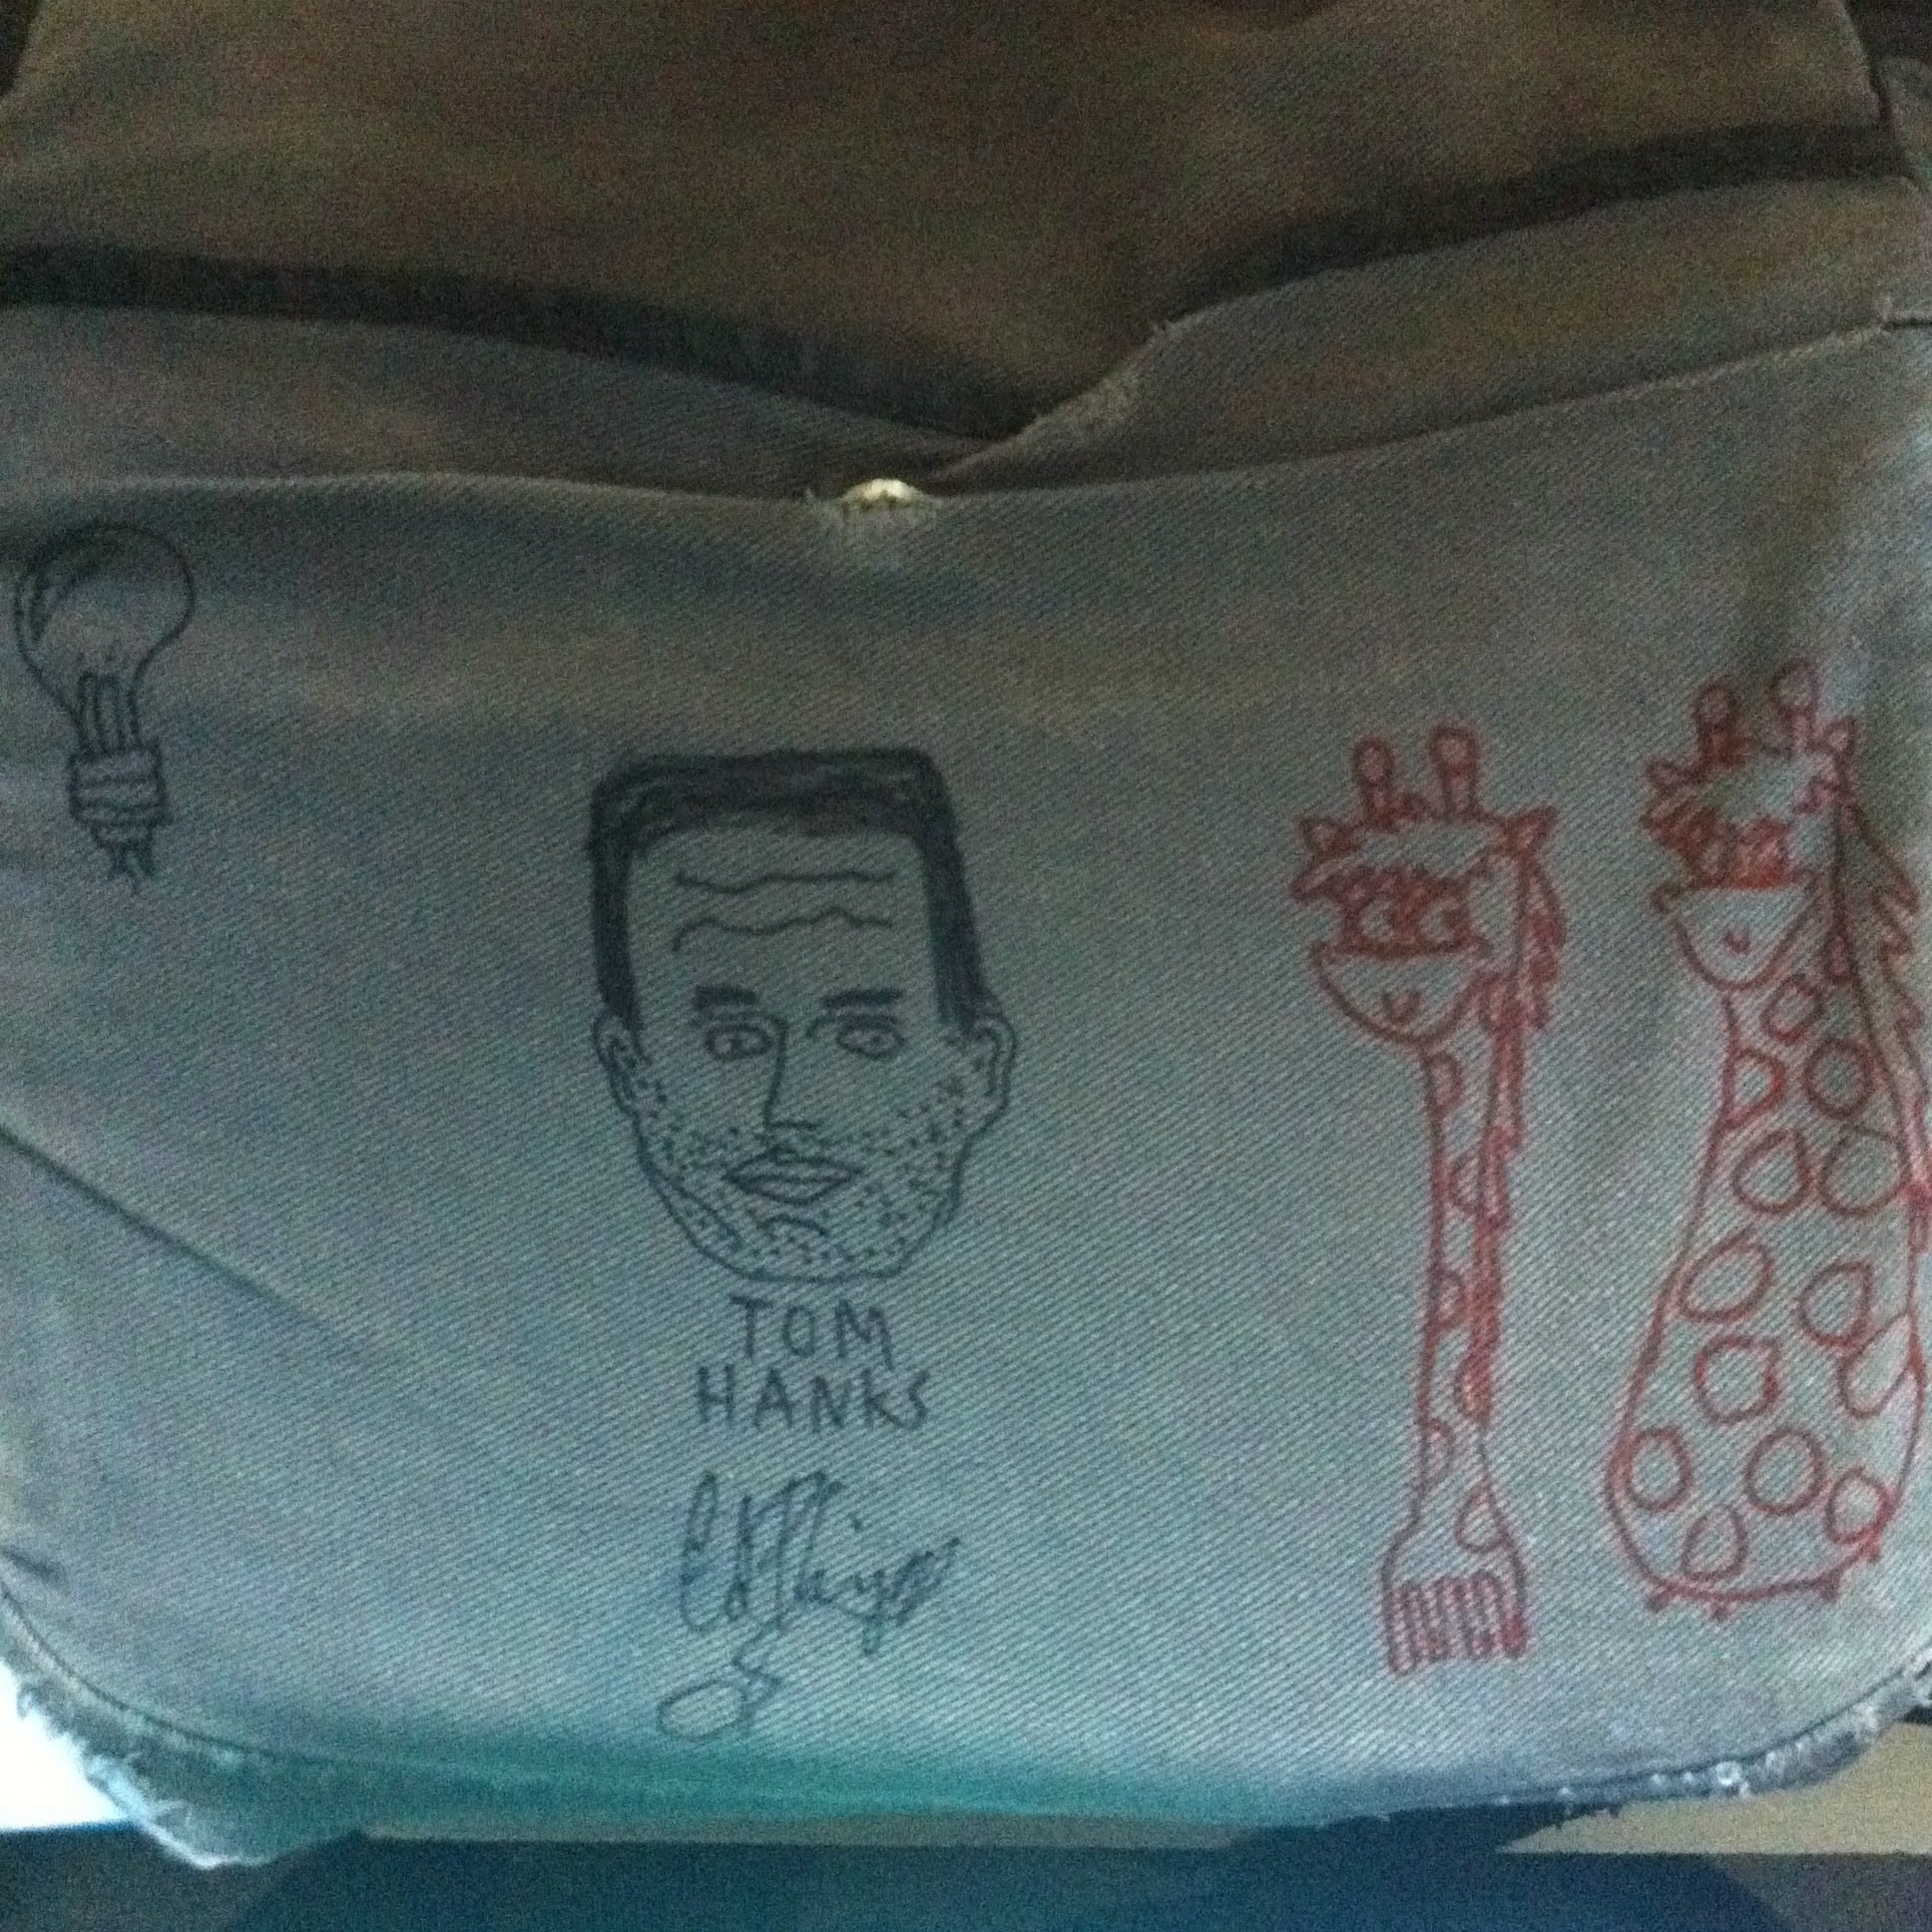 Tom Hanks School Bag